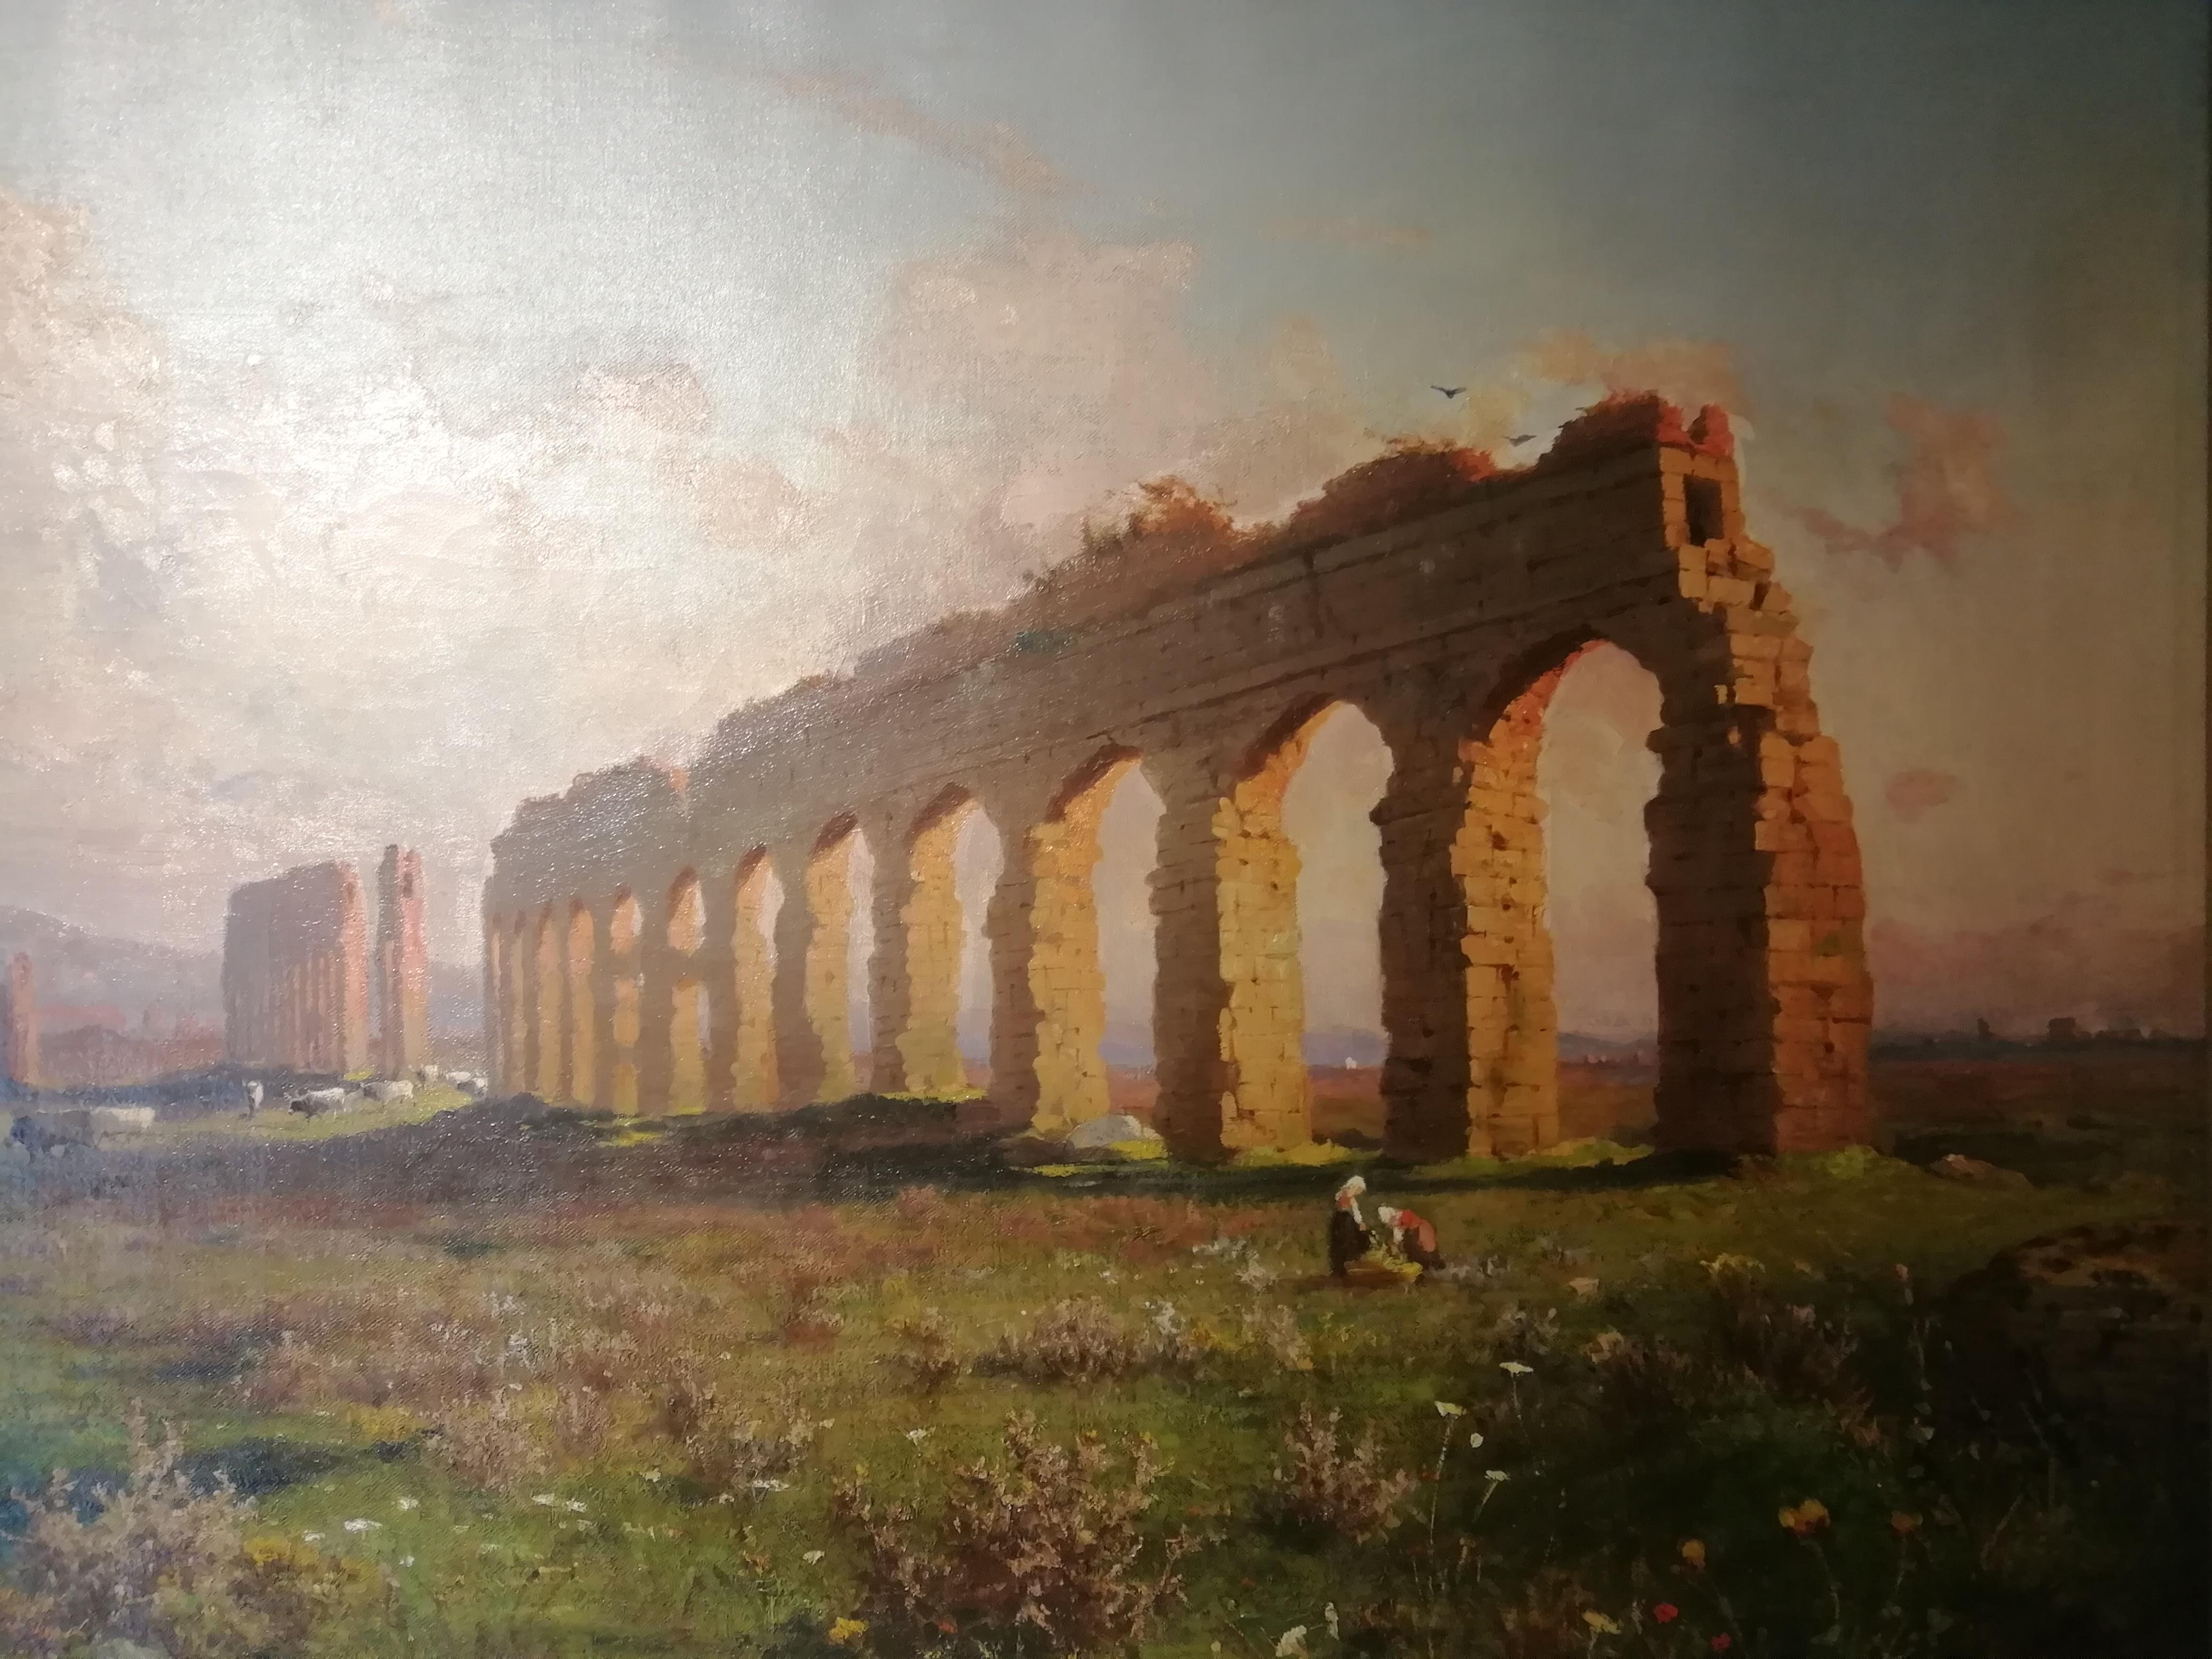 Polish Claudio Aqueduct, Henryk Cieszkowski Oil on Canvas Rome Landscape Painting For Sale